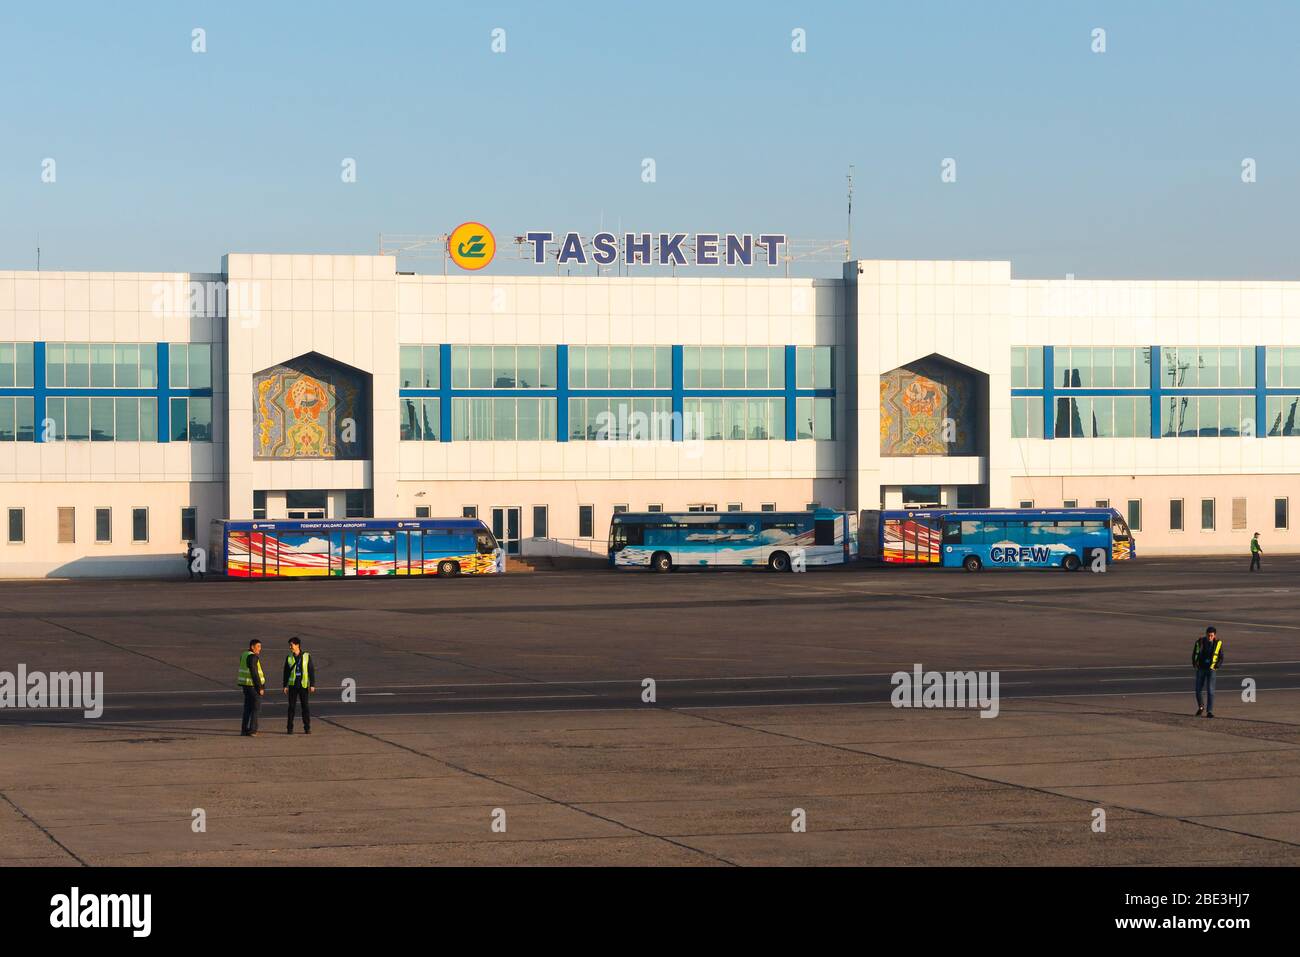 Islam Karimov Tashkent International Airport passengers terminal in Uzbekistan. Facade showing the city name and Uzbekistan Airways logo. Stock Photo